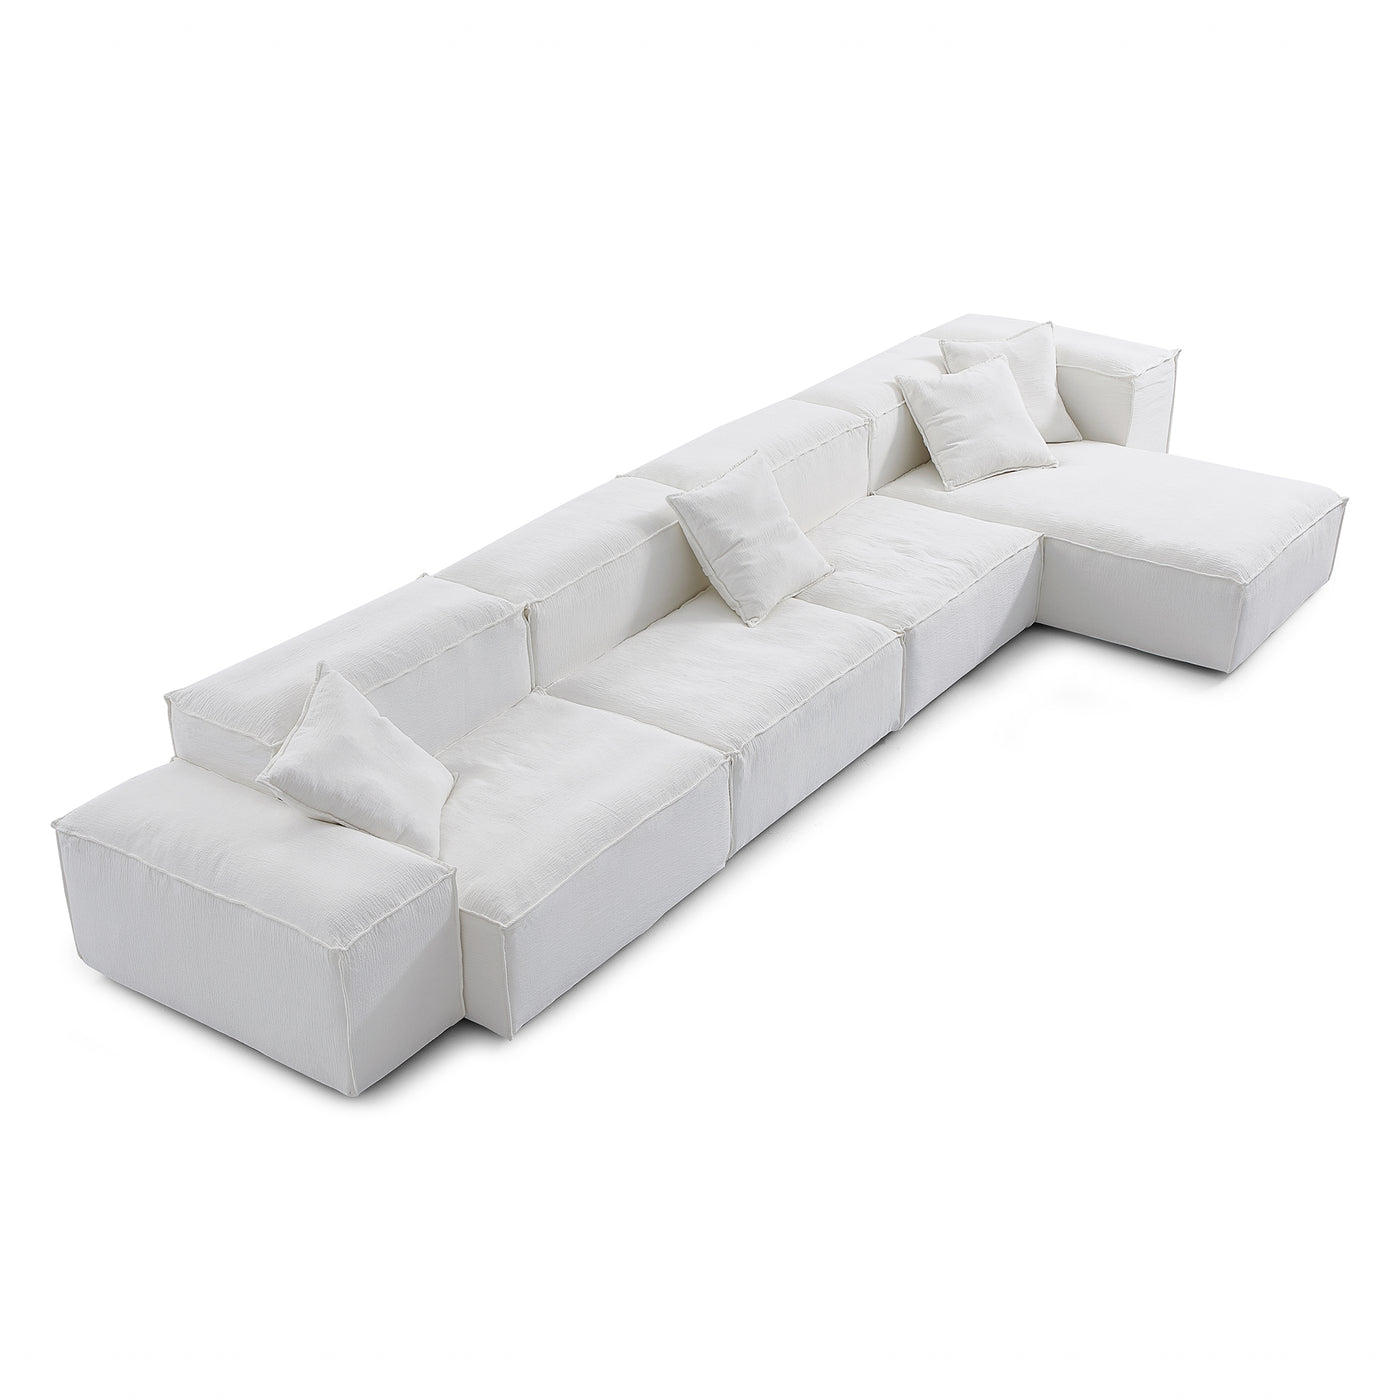 Freedom Modular Khaki Sectional Sofa-White-Low & High-181.1"